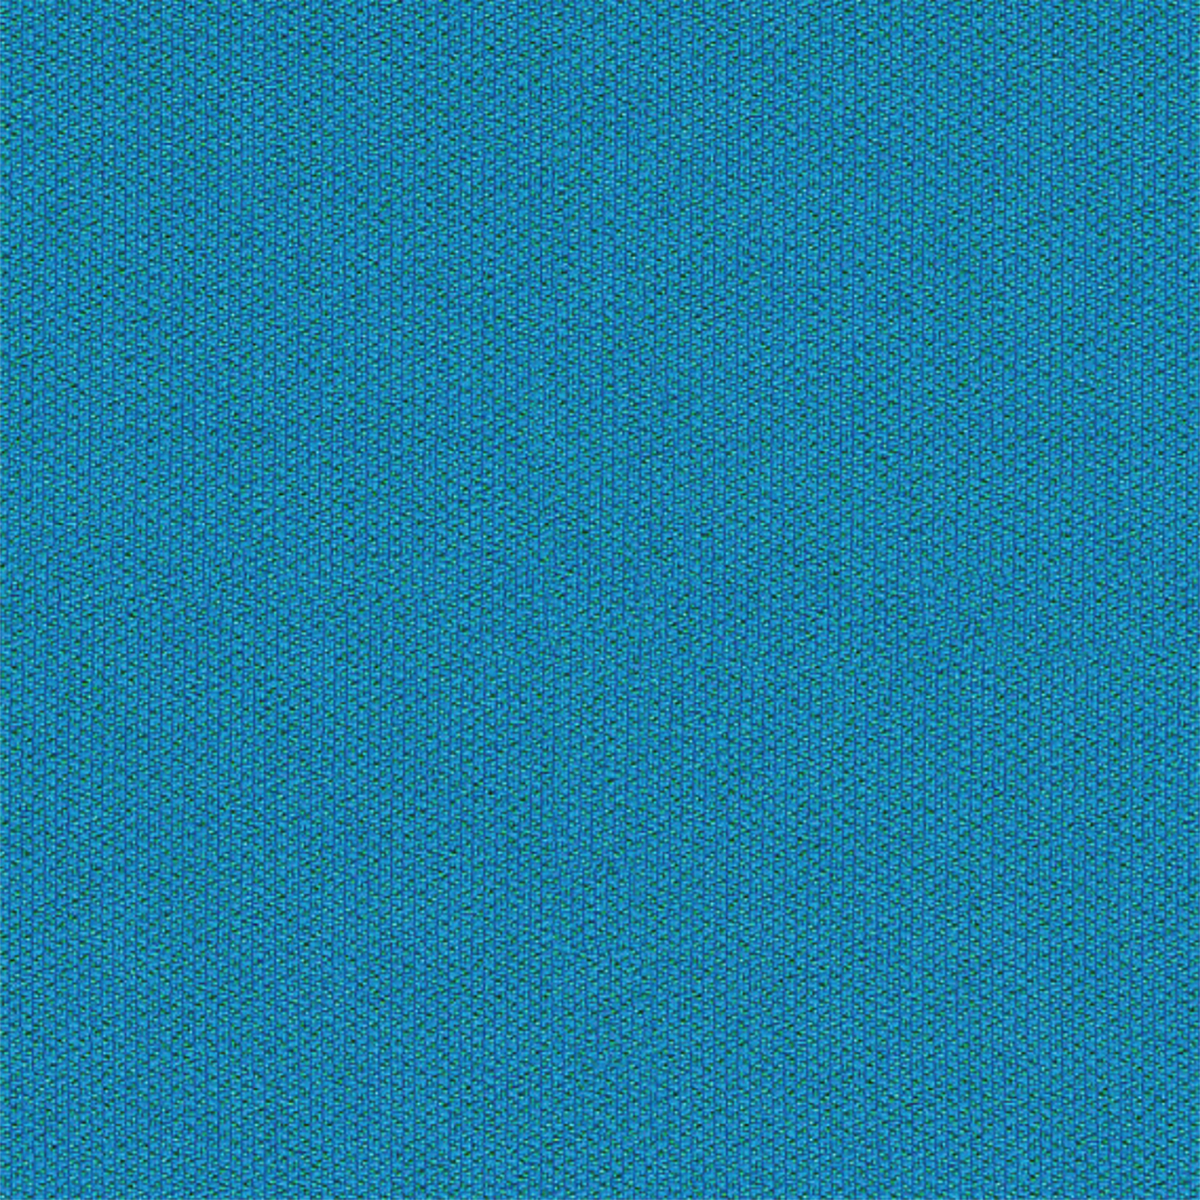 Camira Era CE10 Turquoise [+€104.92]